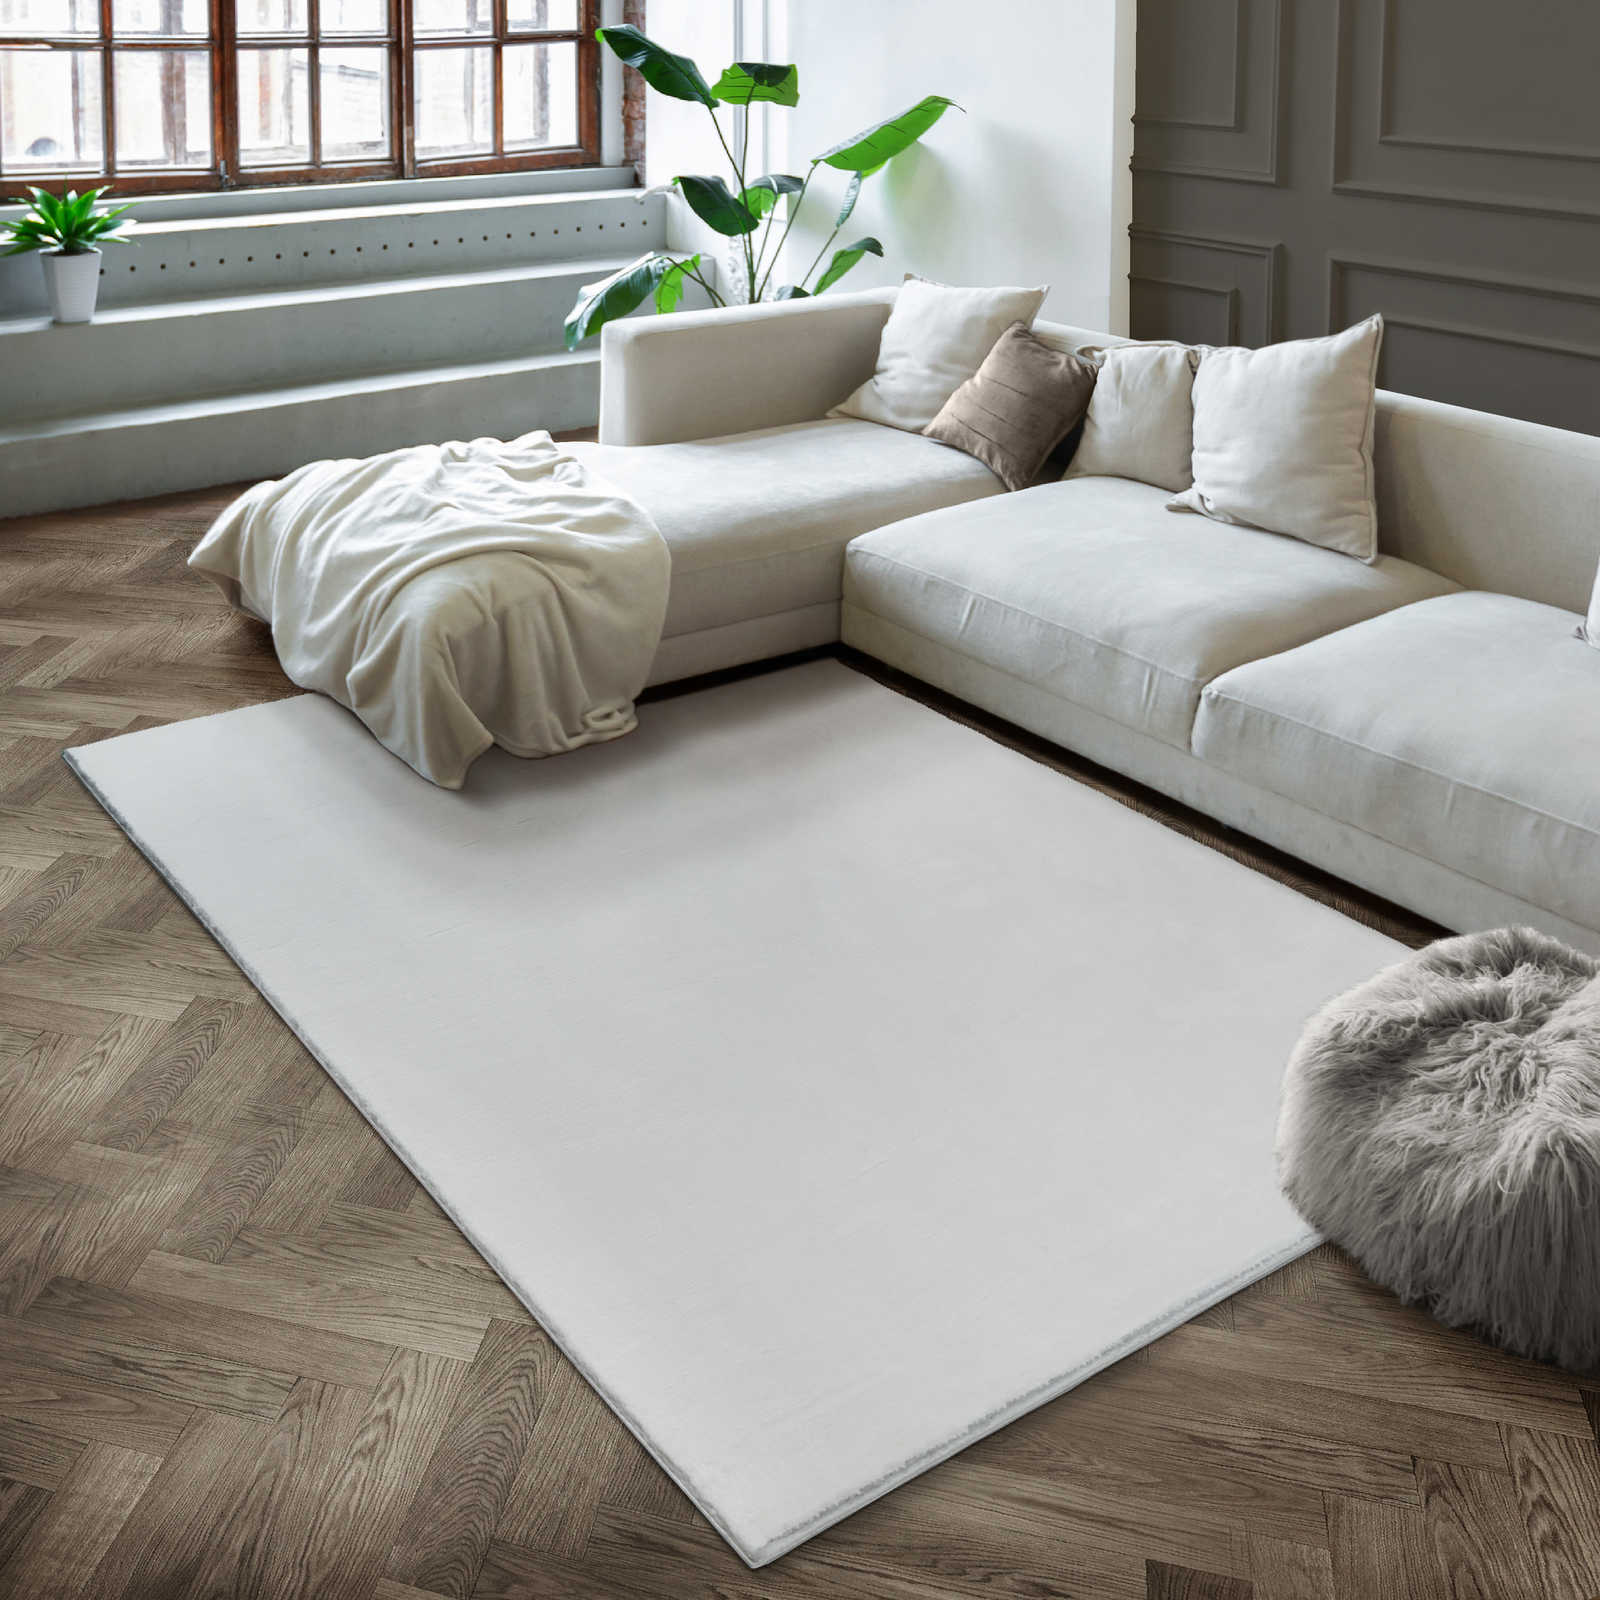 Fluffy high pile carpet in pleasant cream - 110 x 60 cm
